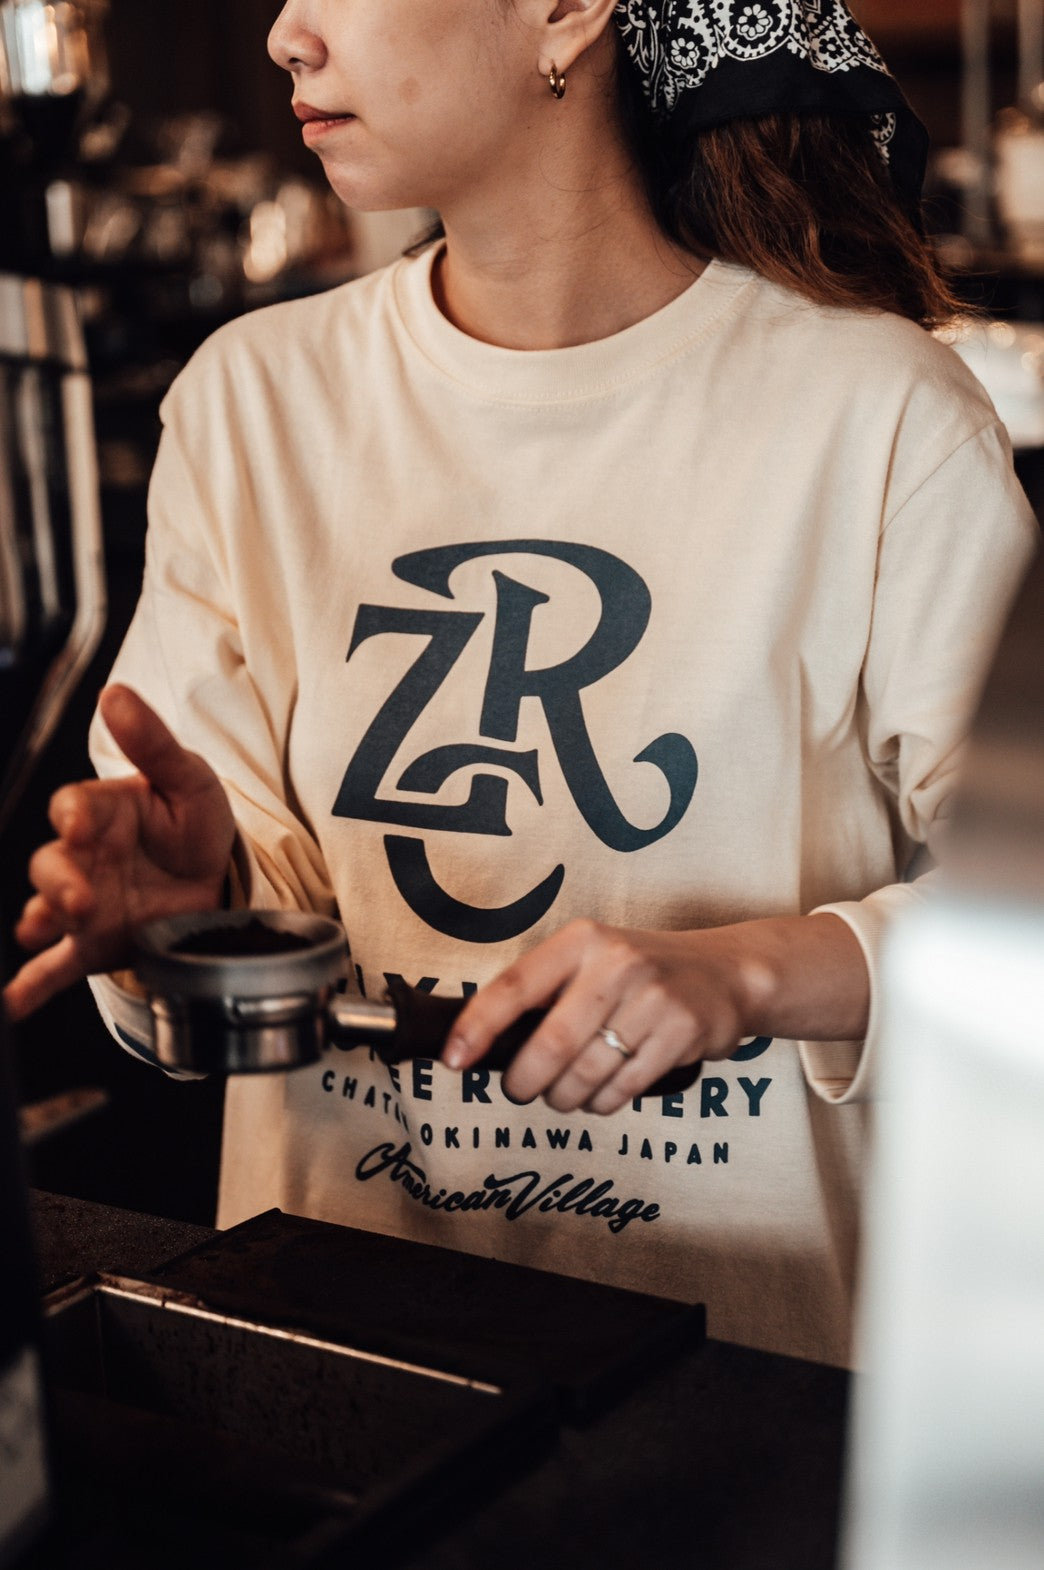 ZCR "COFFEE & DESTROY" Arms ロングTシャツ